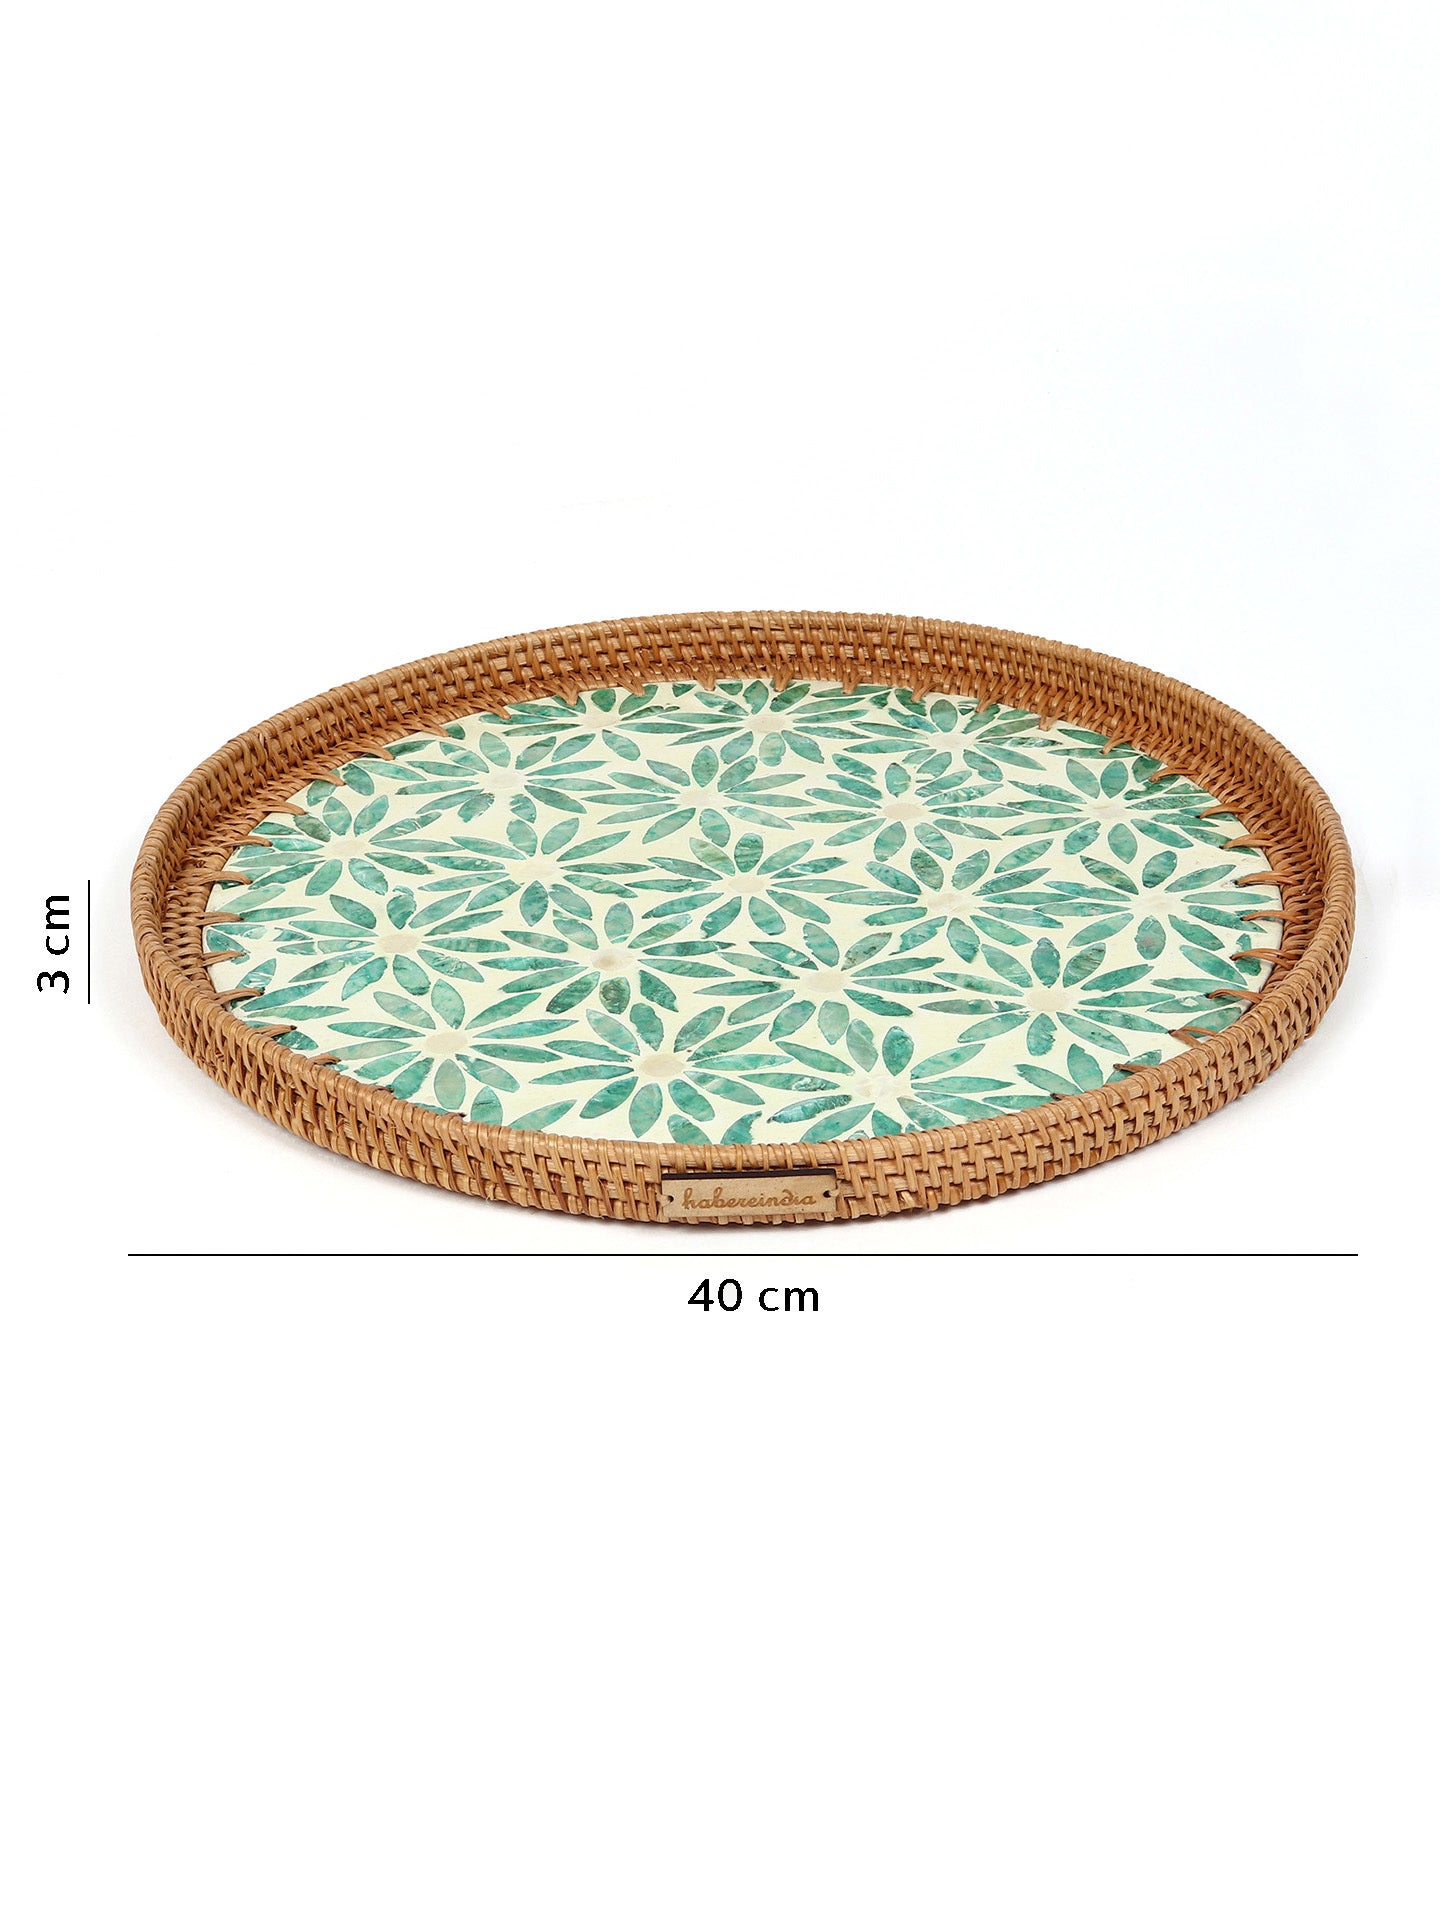 Cane Tray Round Tropical Mosaic